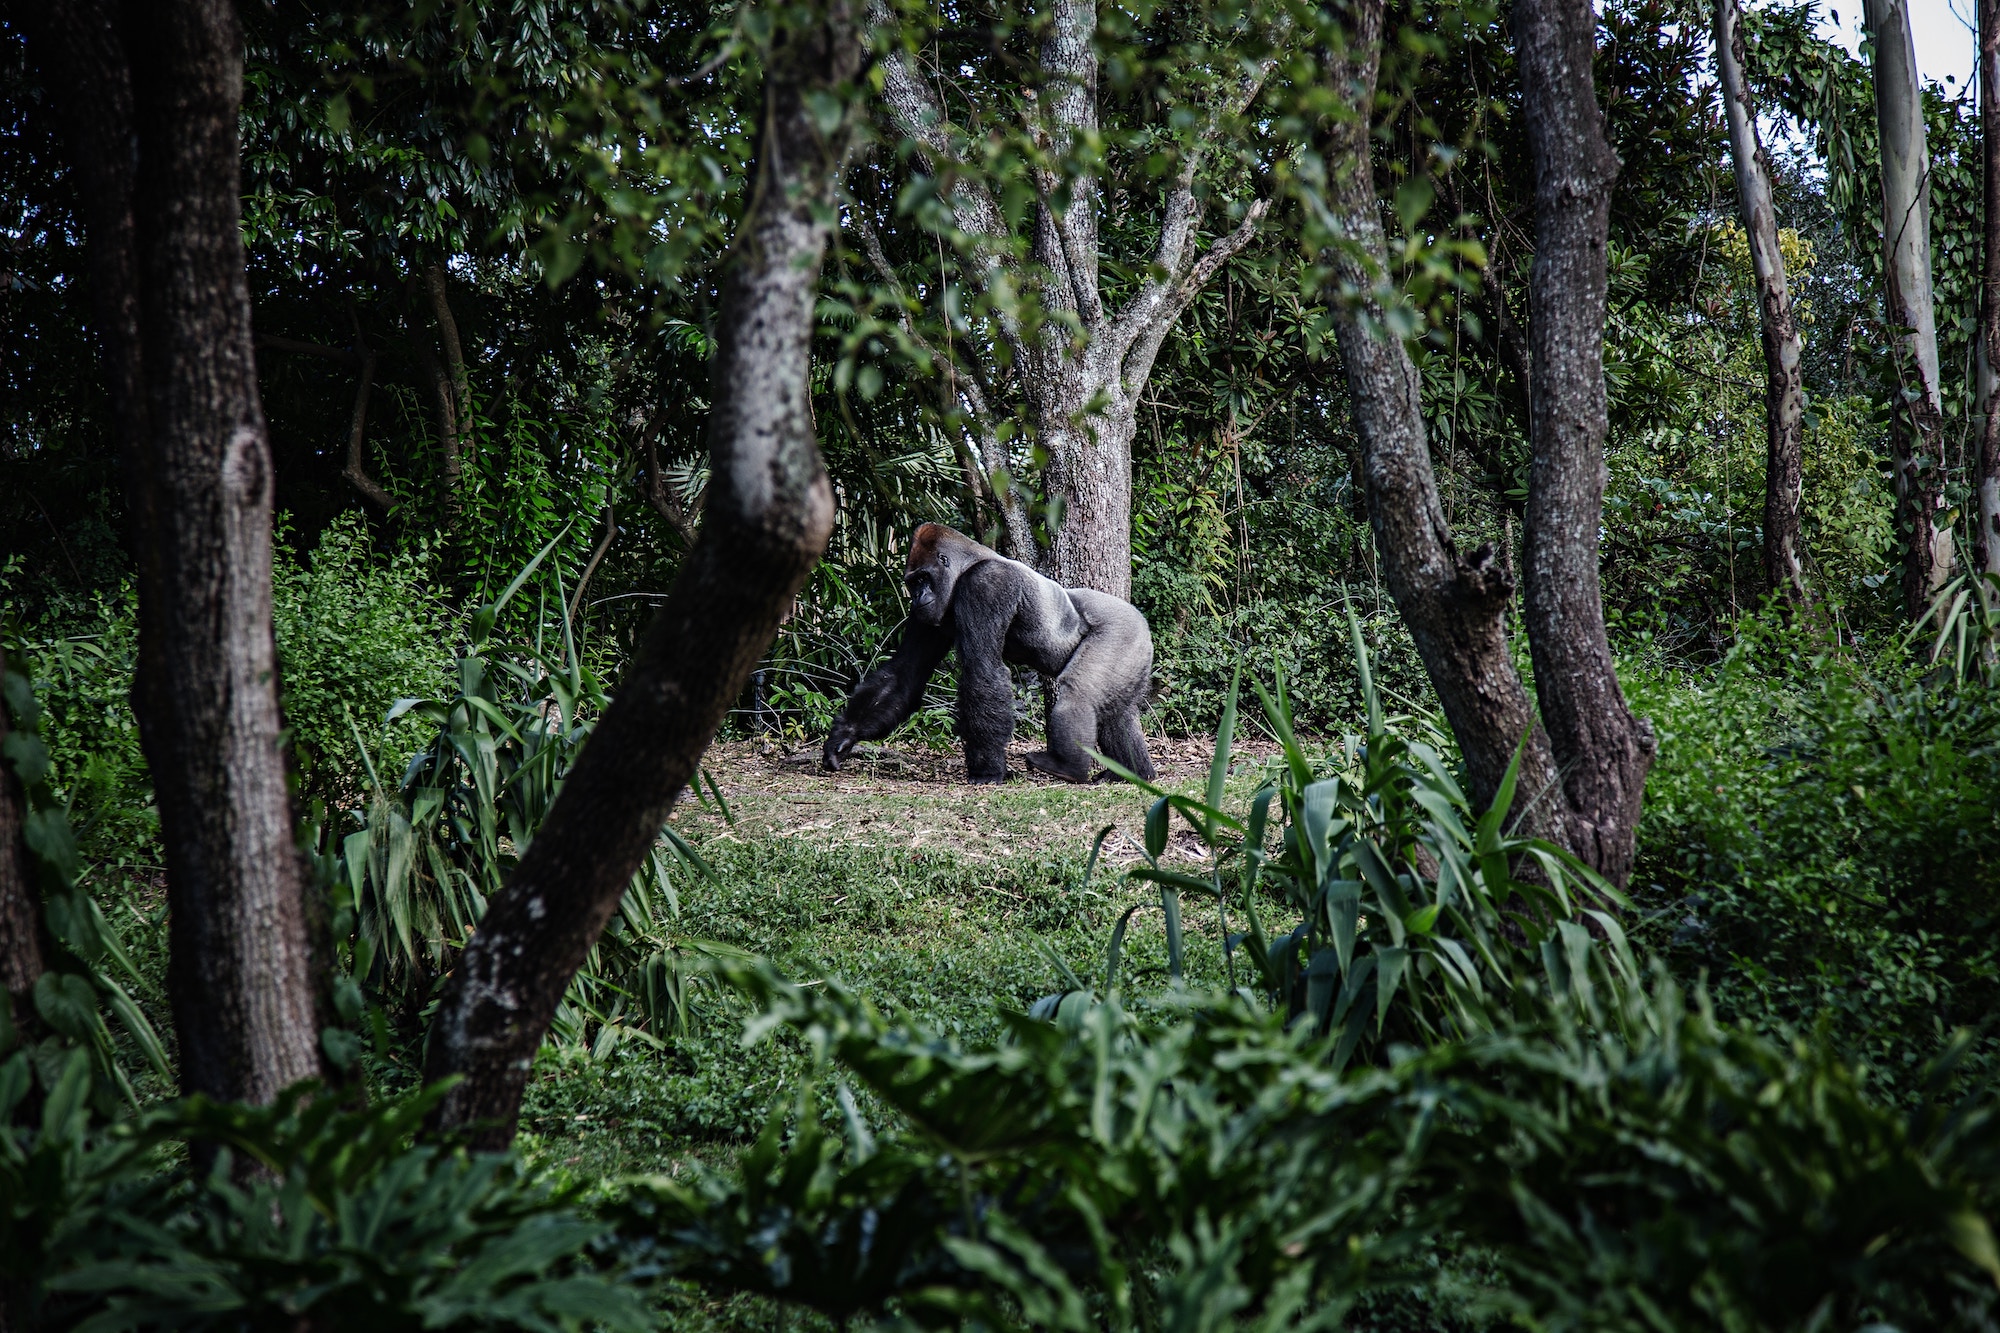 A male mountain gorilla walking through the forest